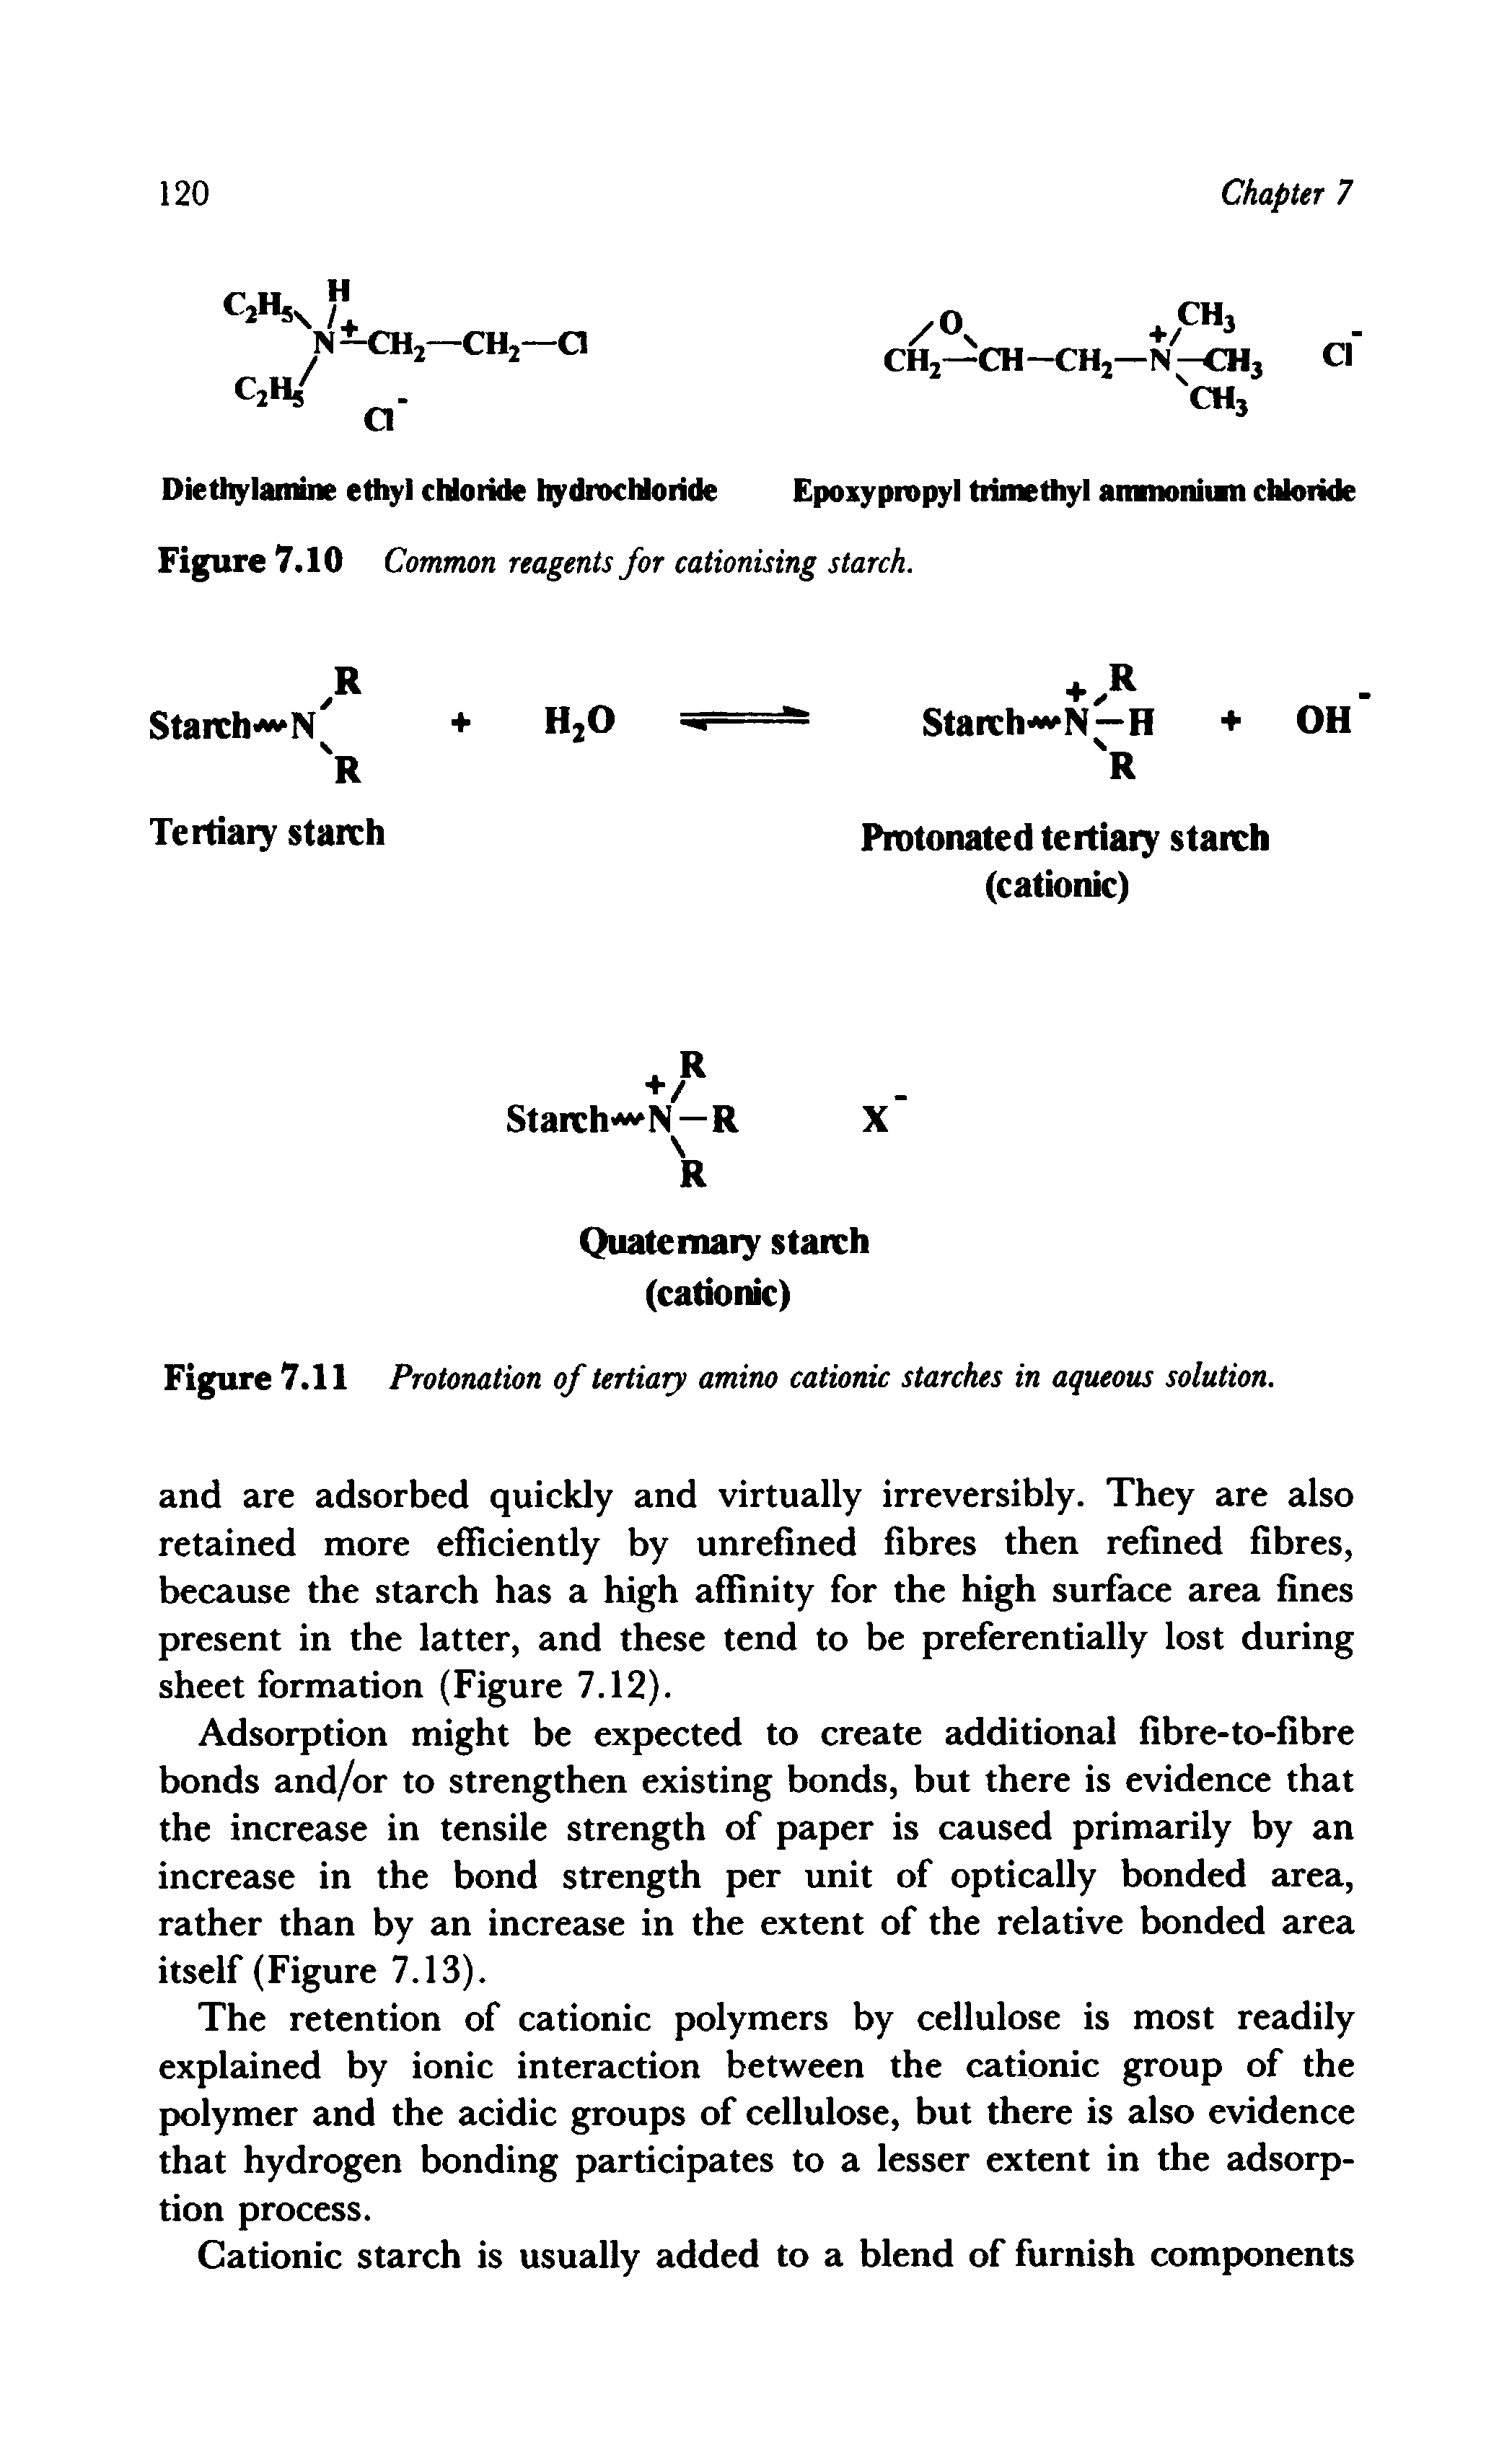 Figure 7.11 Protonation of tertiary amino cationic starches in aqueous solution.